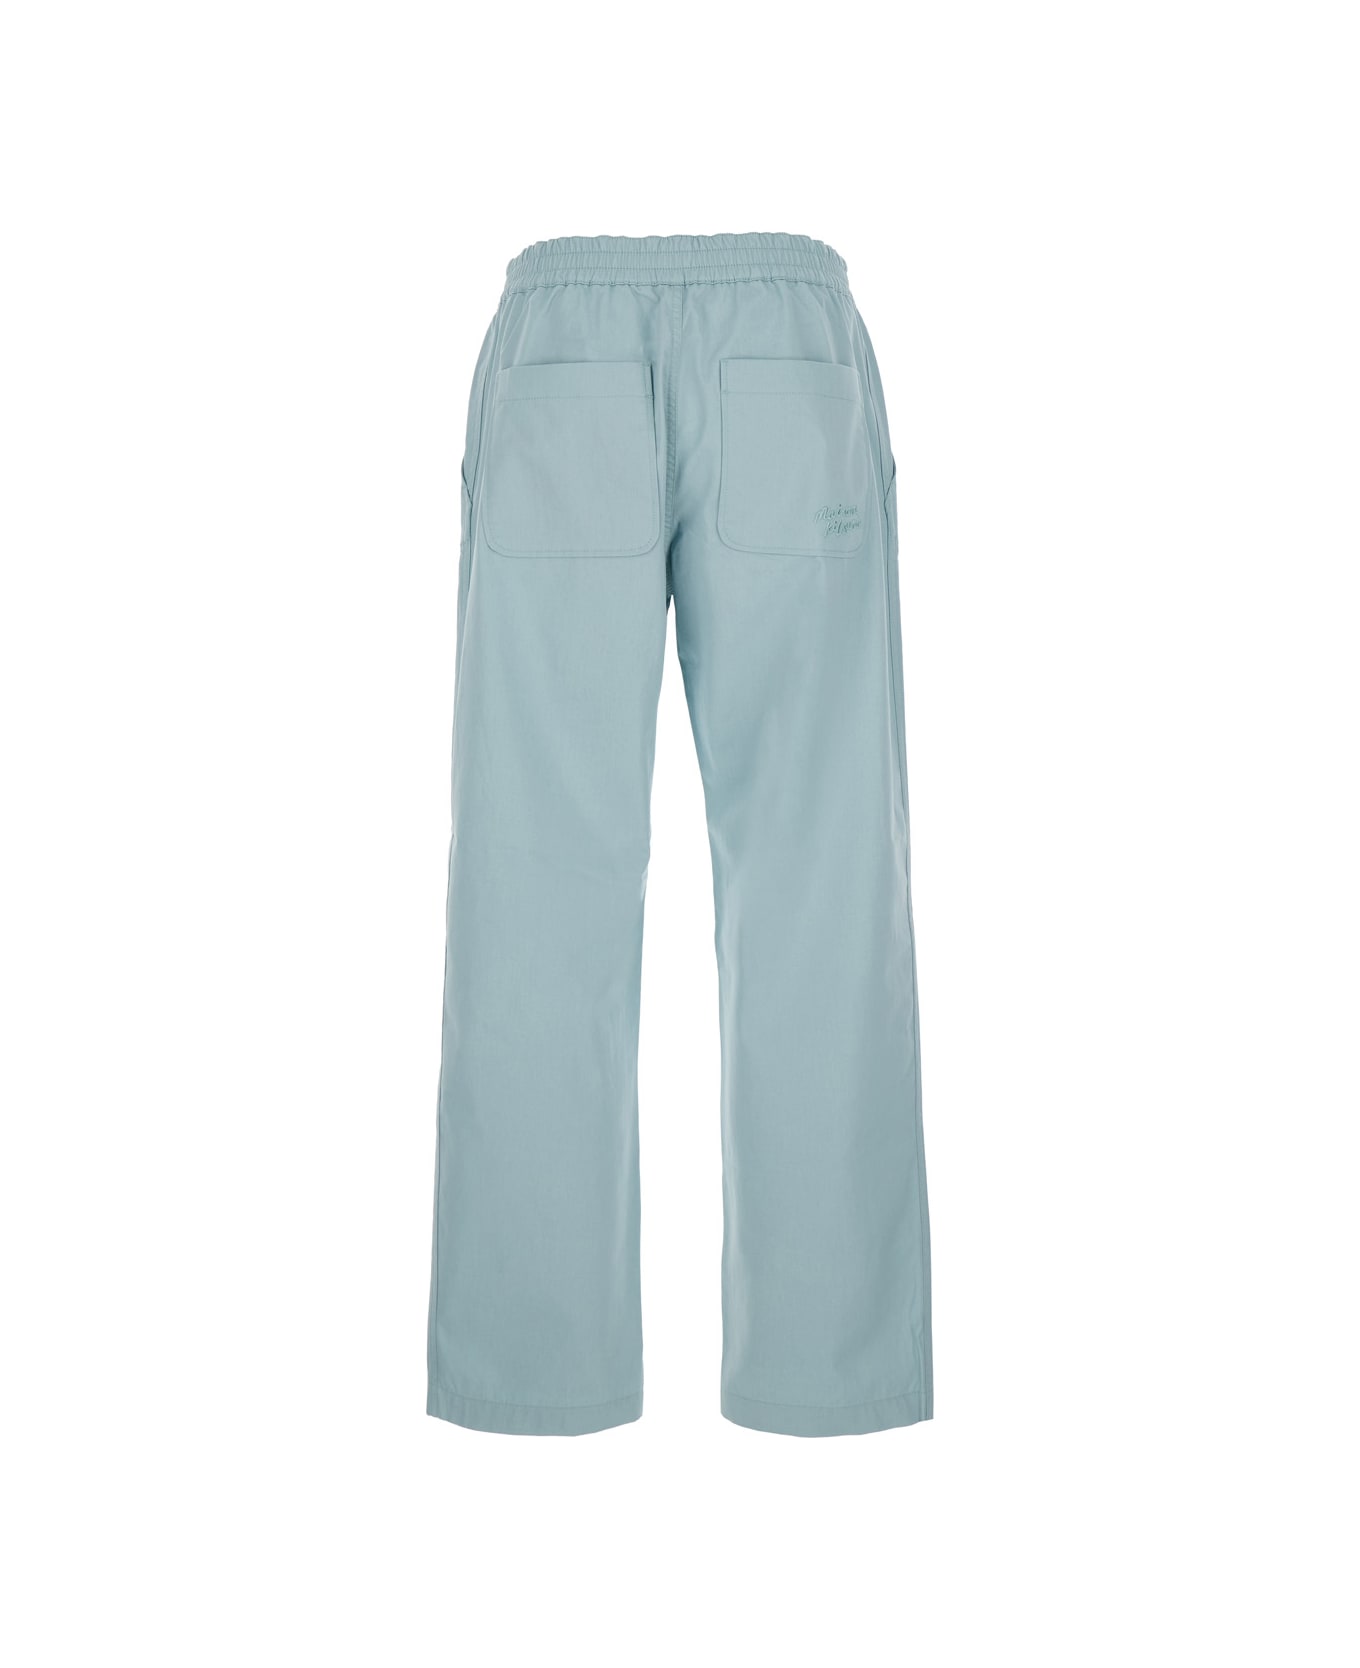 Maison Kitsuné Light Blue Straight Pants In Cotton Man - Light blue